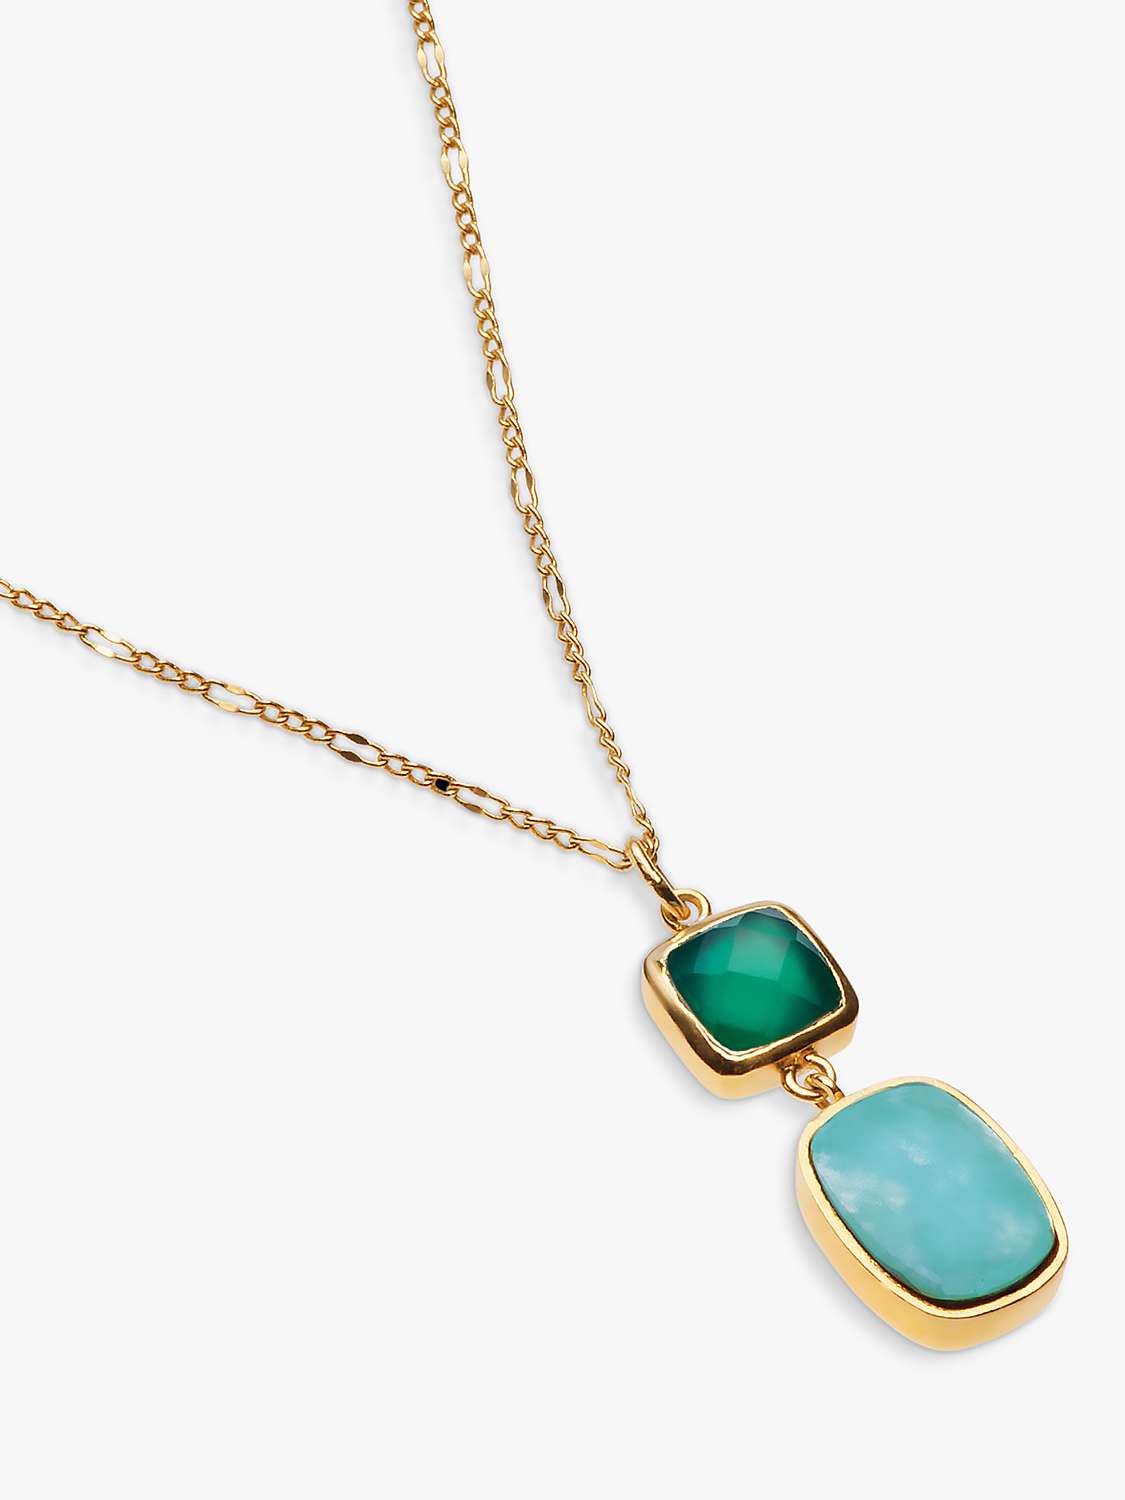 Buy Sarah Alexander Bengal Gemstone Pendant Necklace, Gold Online at johnlewis.com